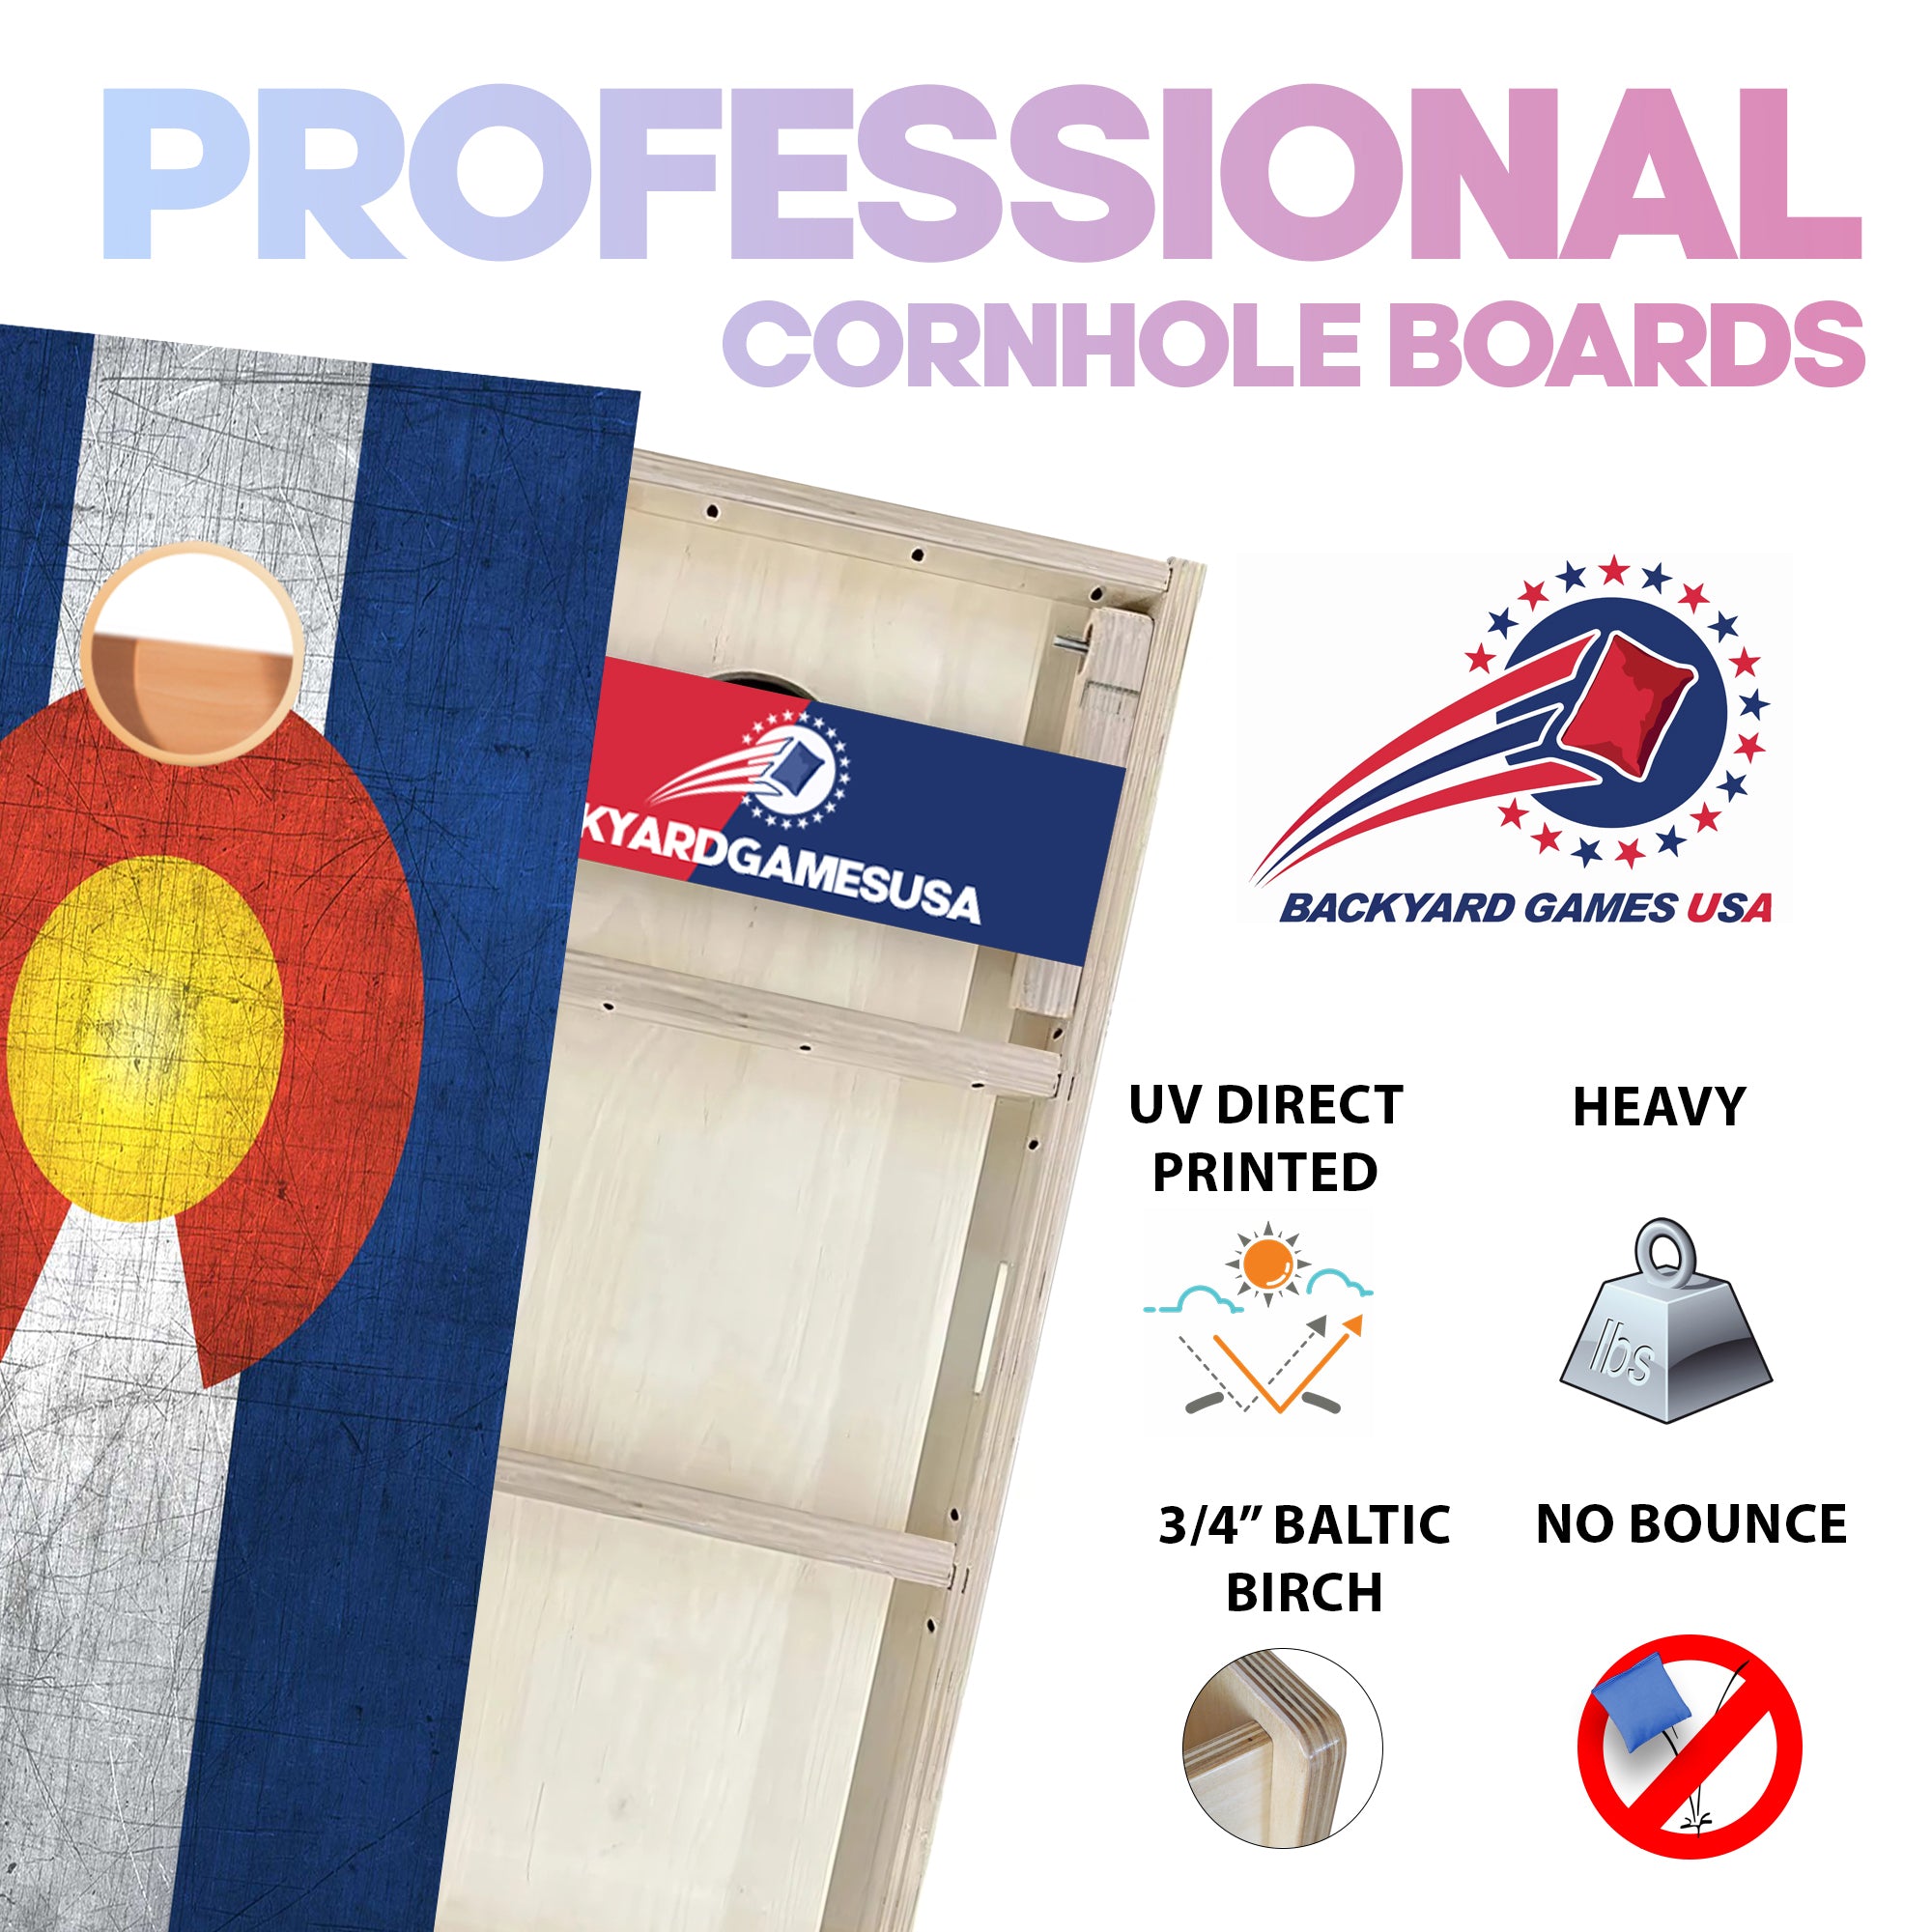 Colorado Professional Cornhole Boards